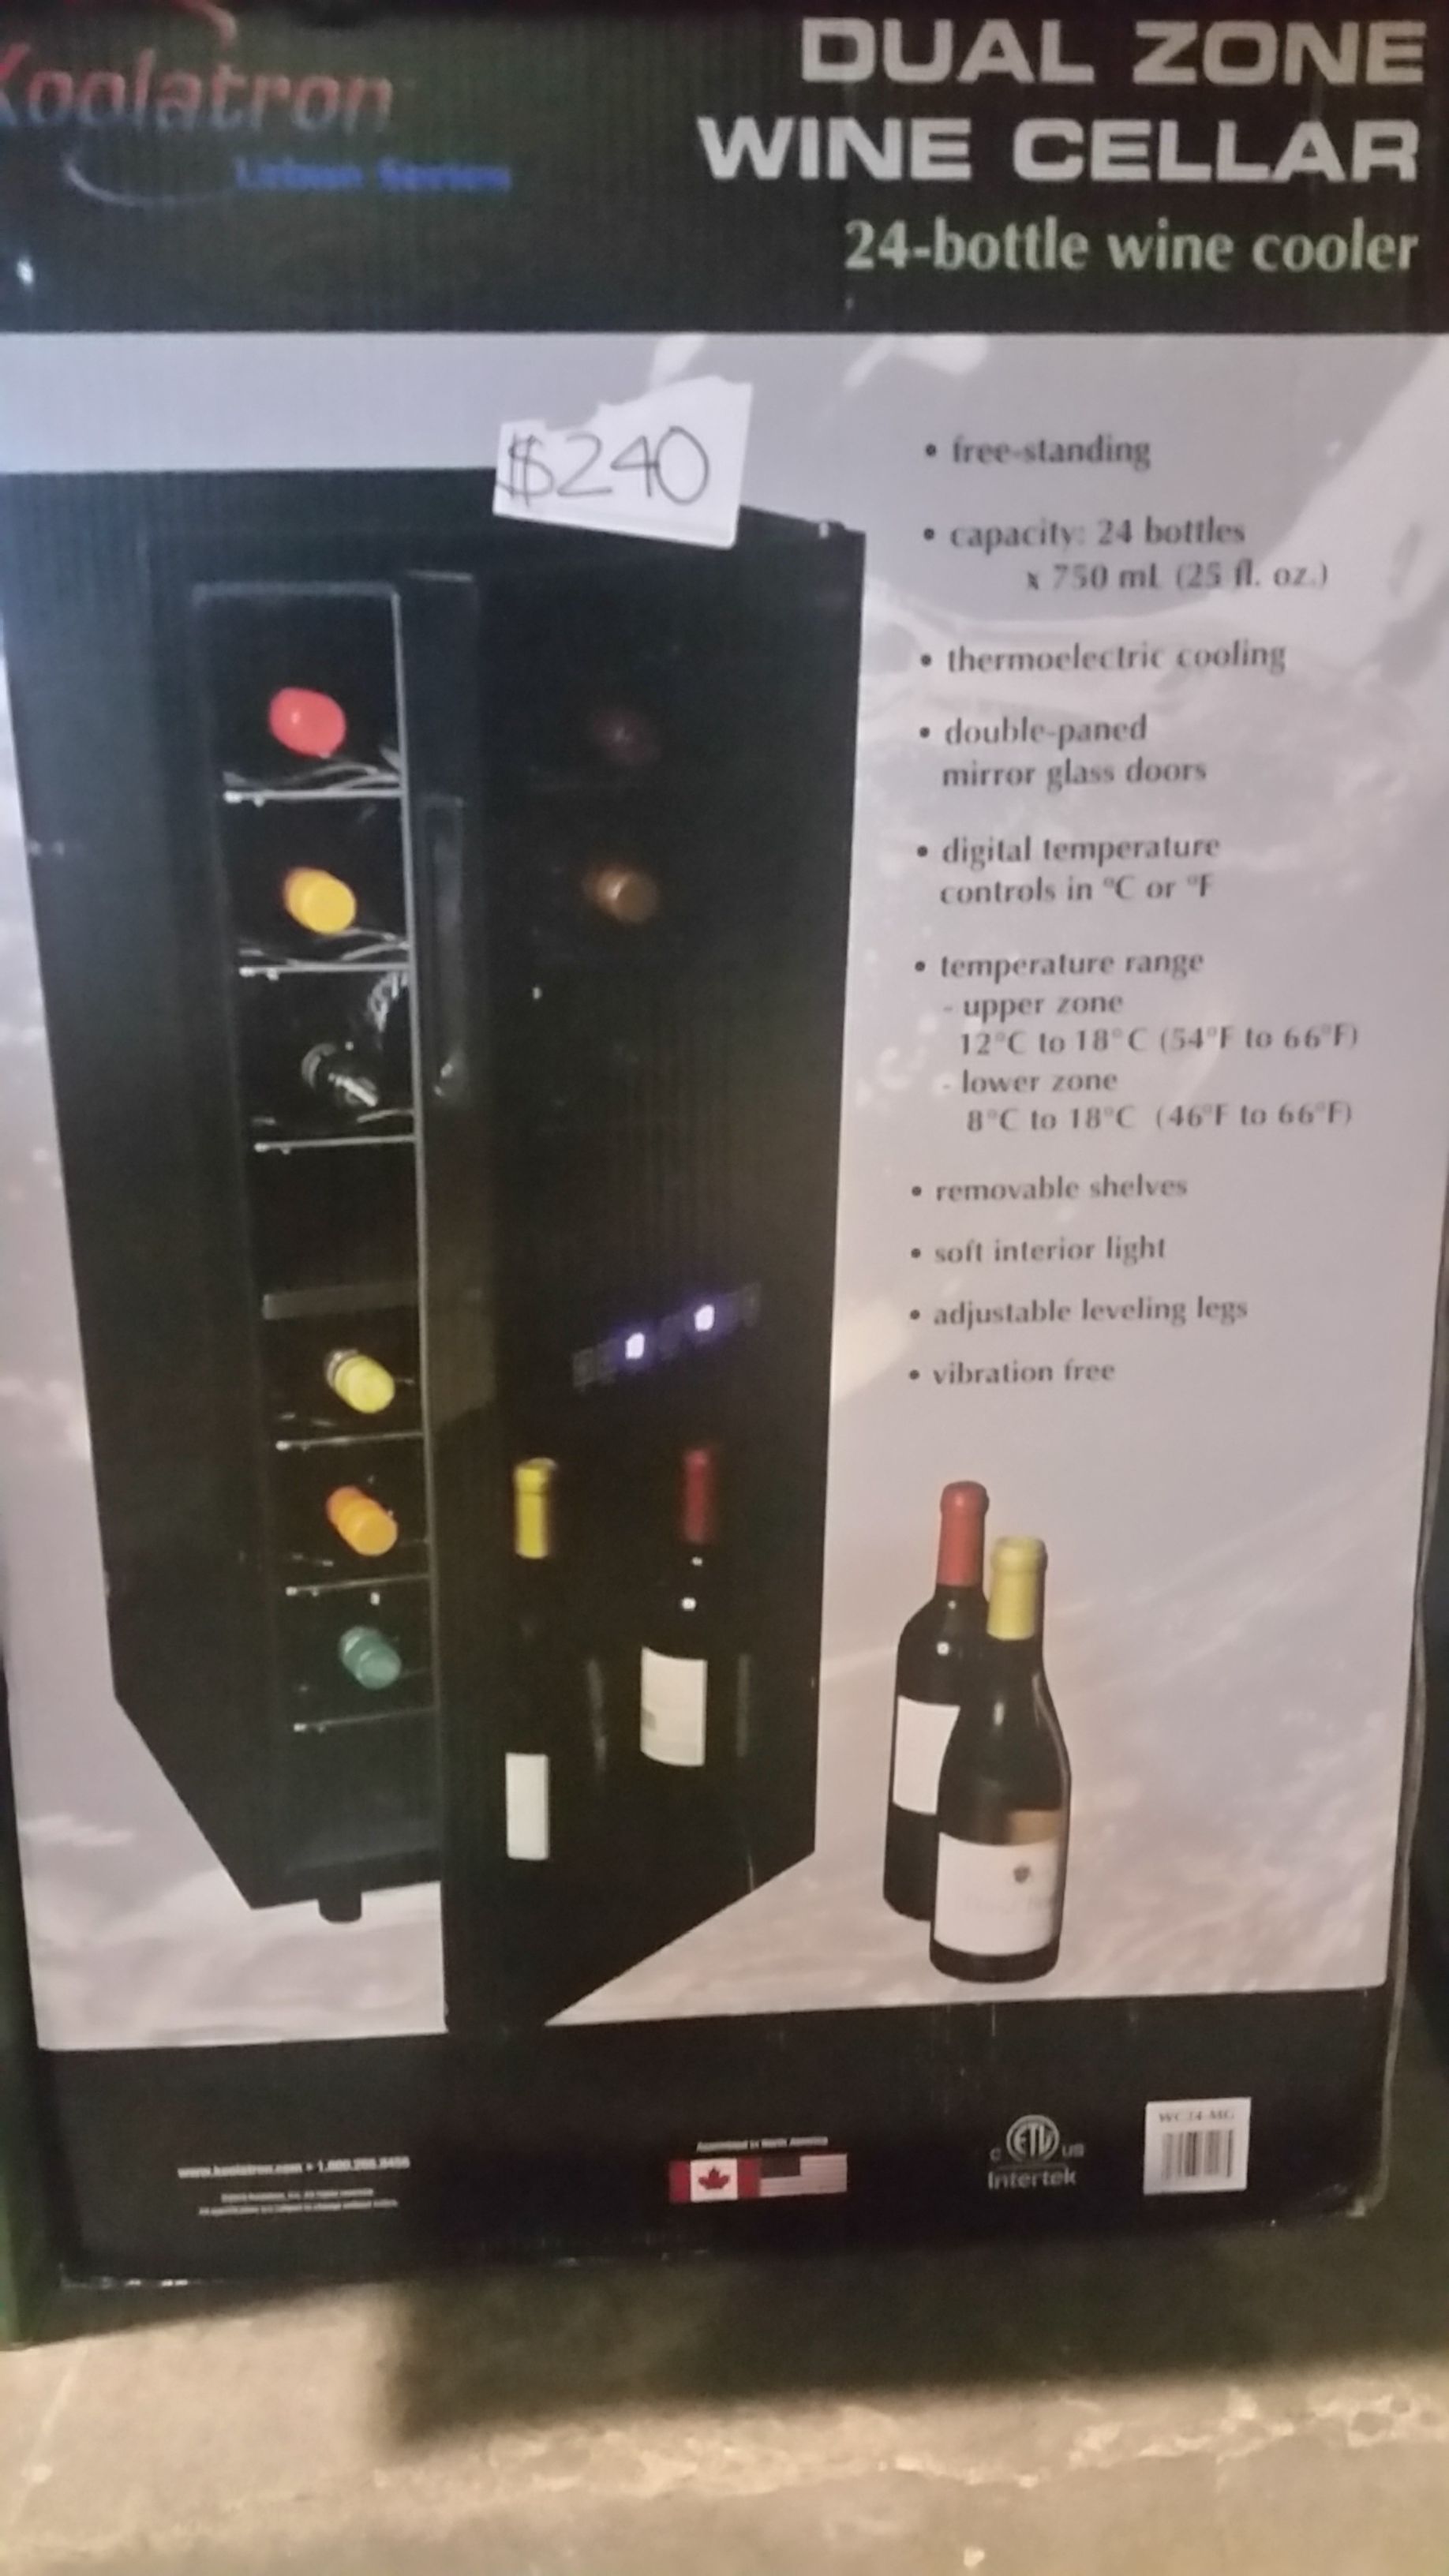 Brand new wine cooler